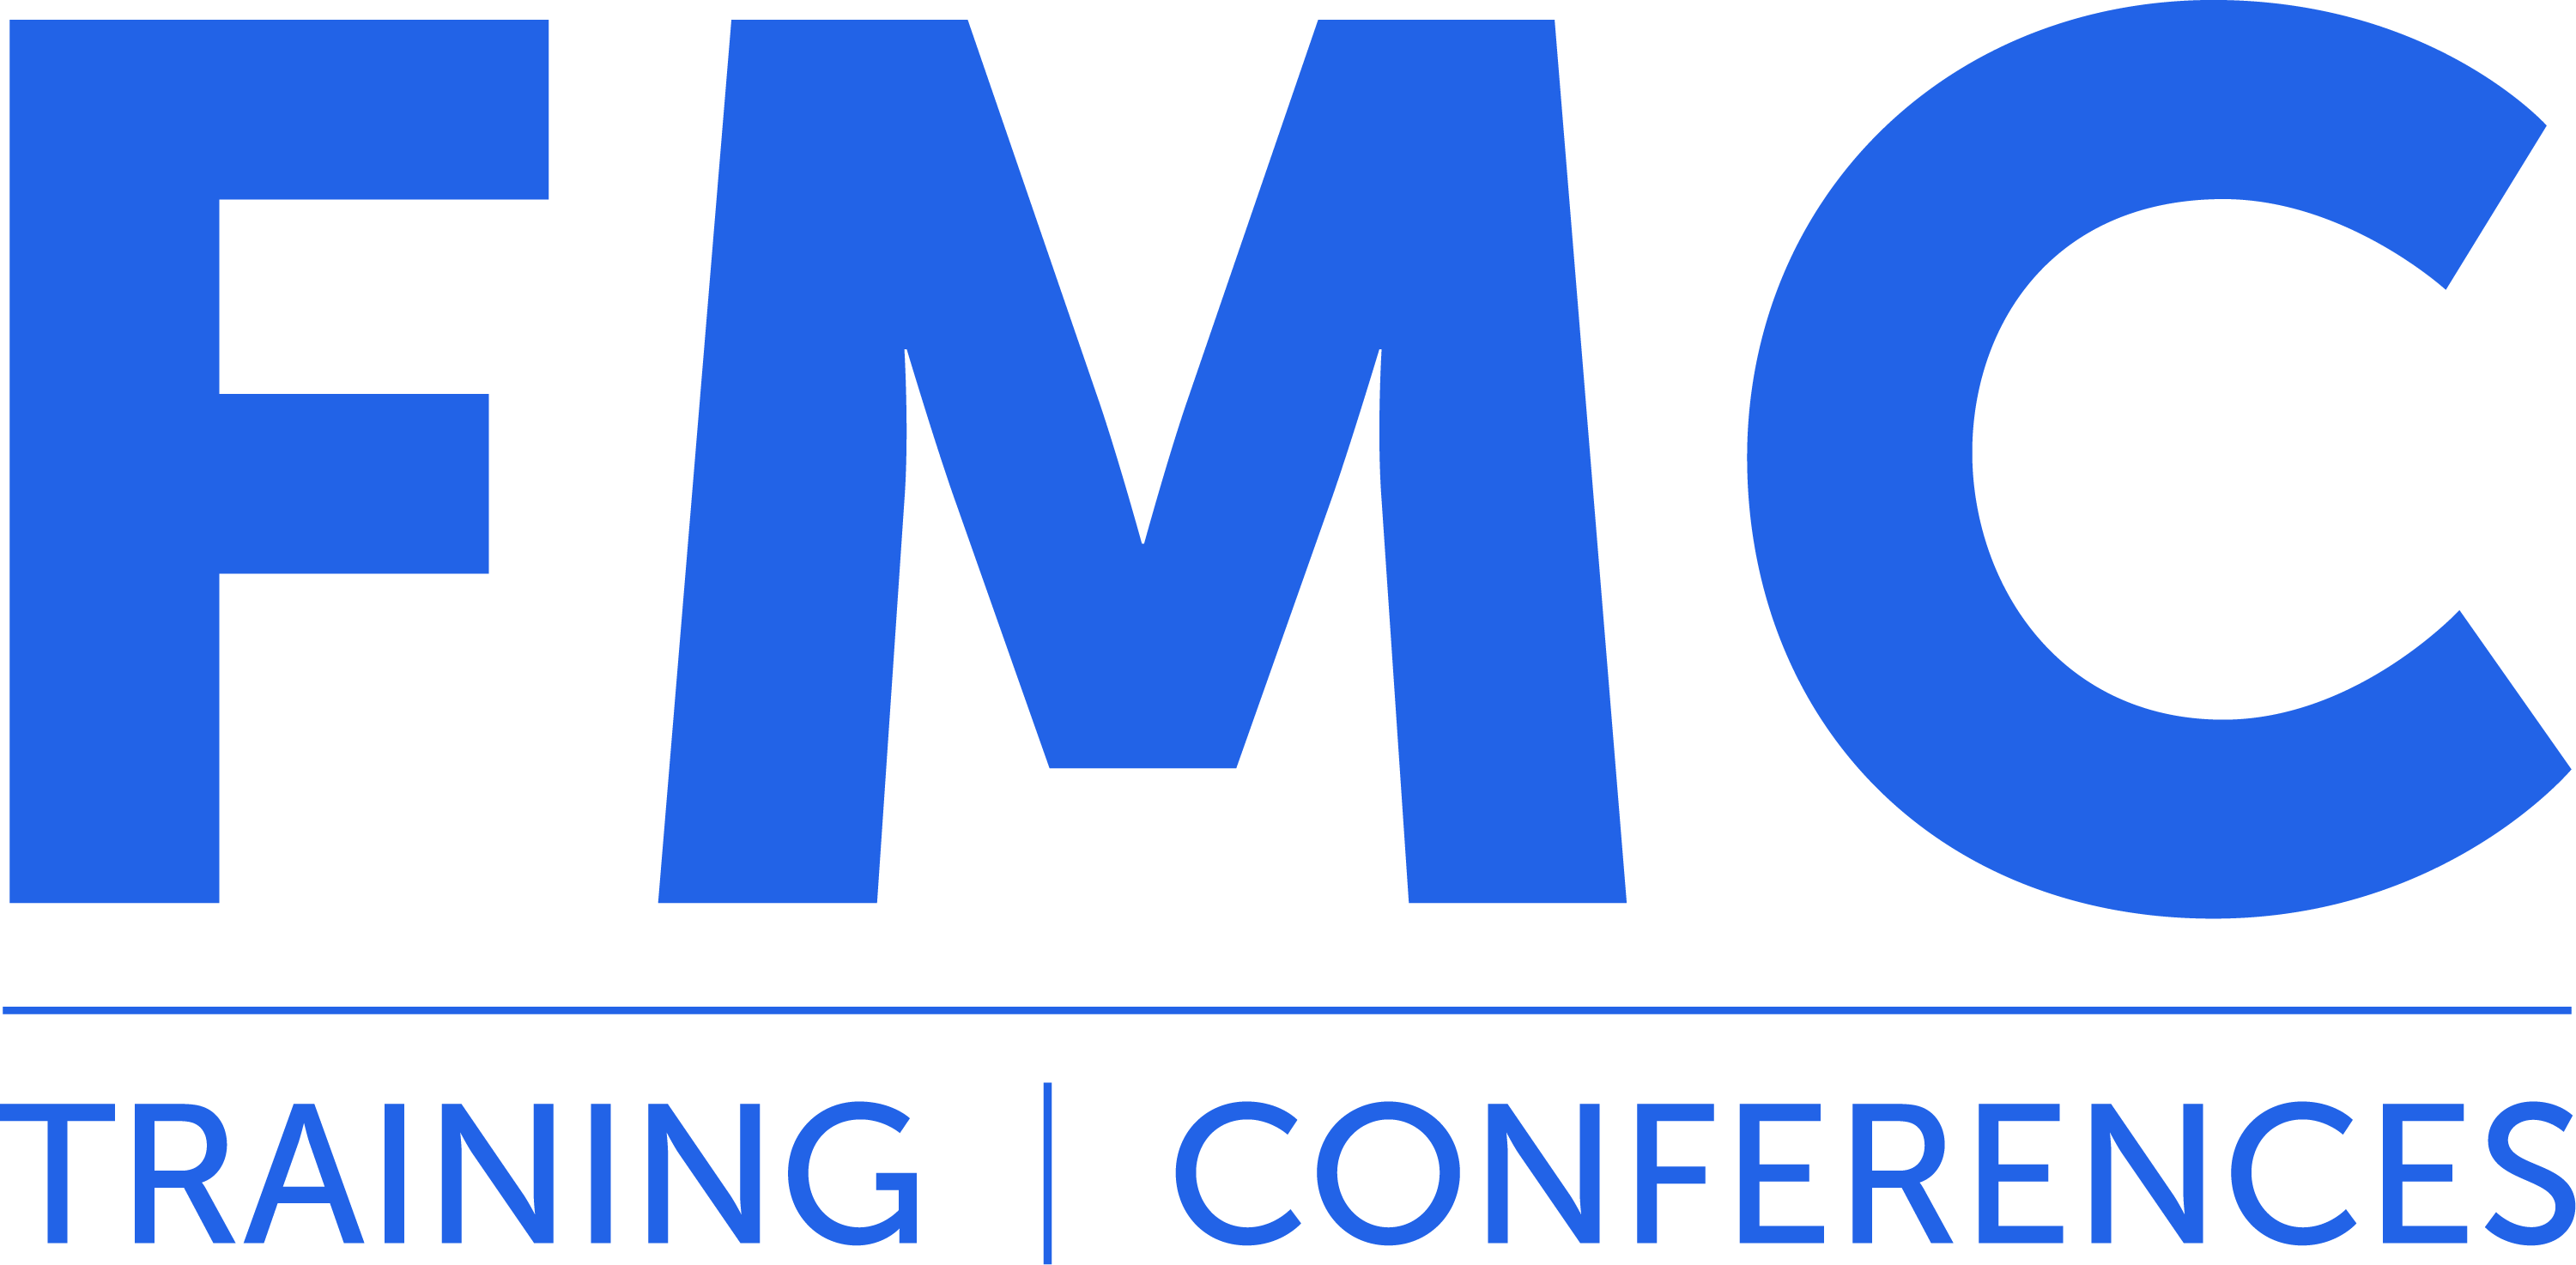 Future Media Conferences (FMC)